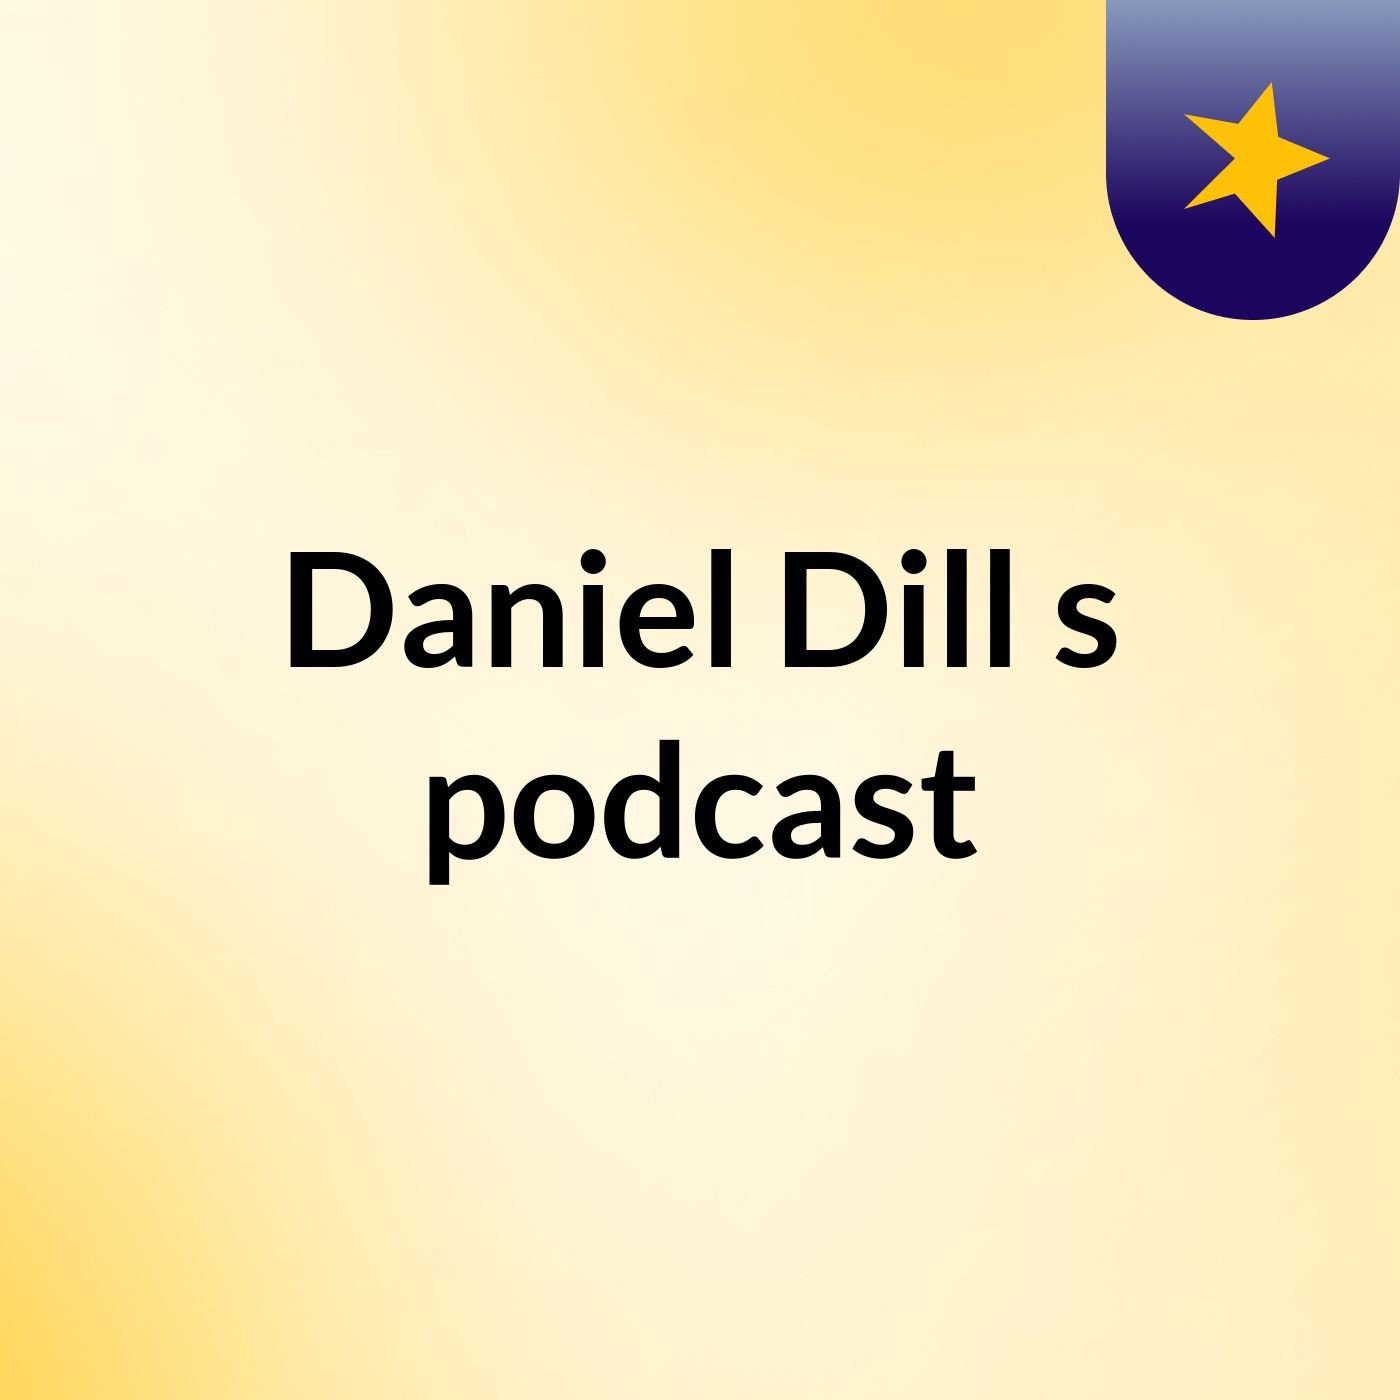 Daniel Dill's podcast